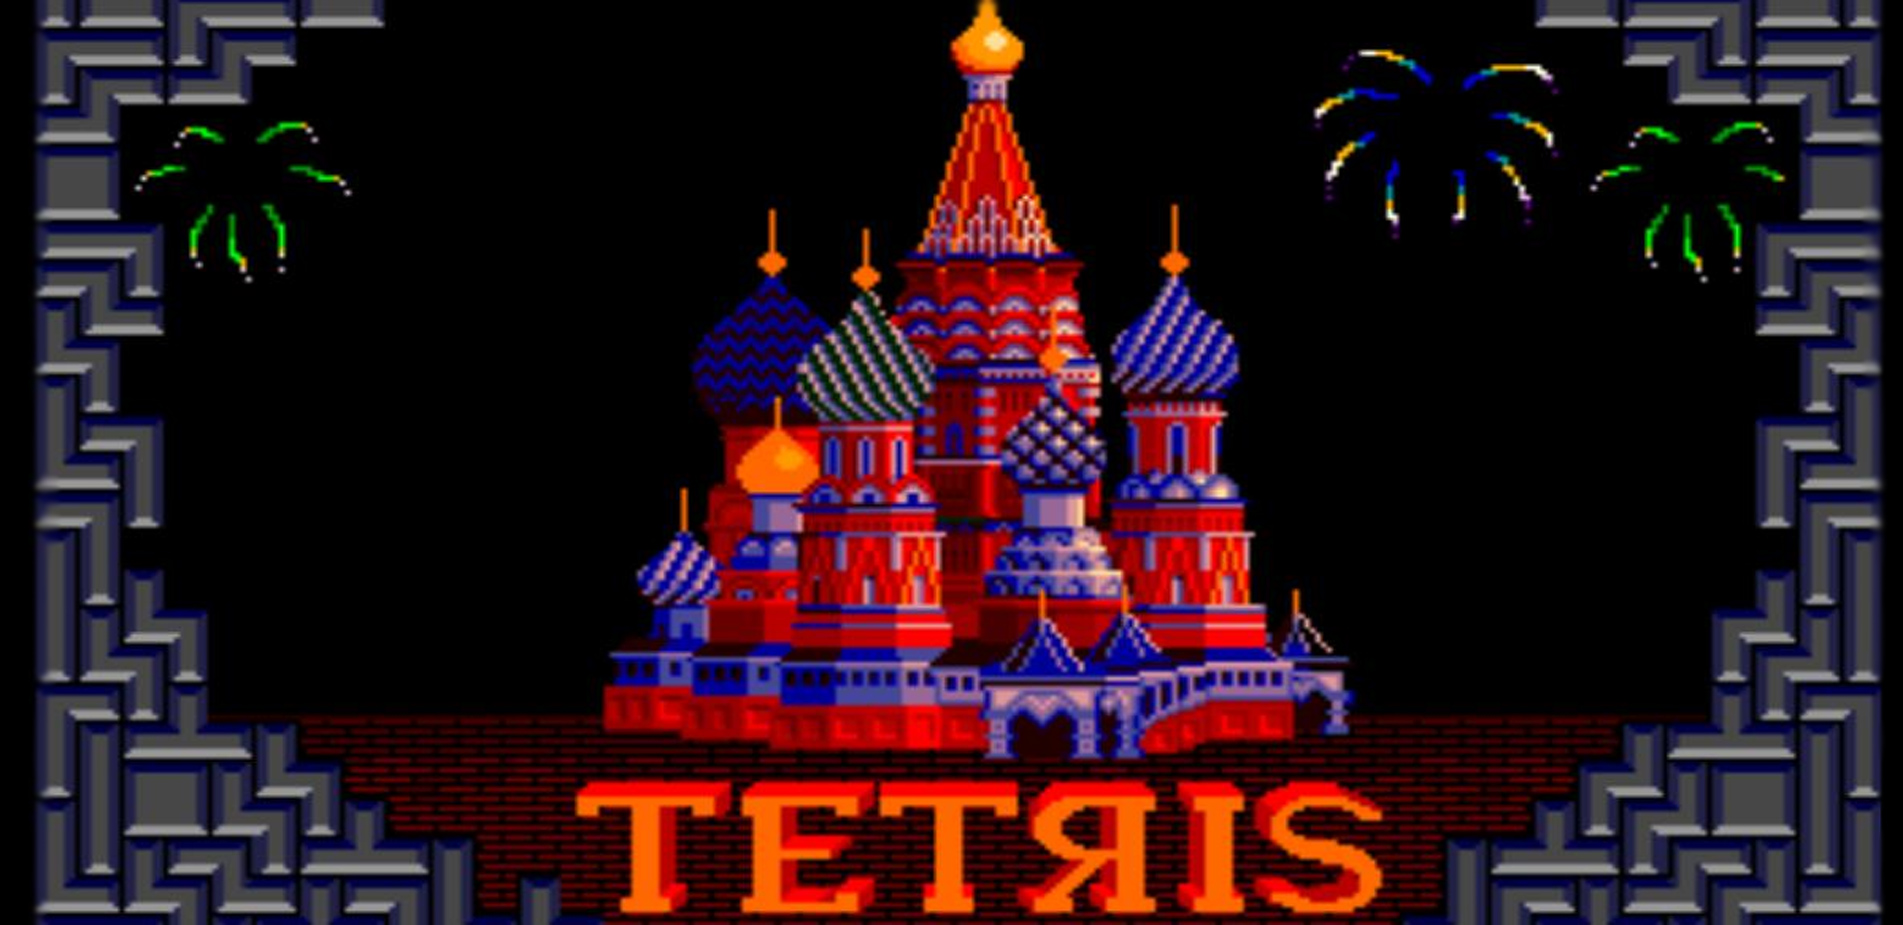 Tetris: Το διάσημο ηλεκτρονικό παιχνίδι με το ελληνικό όνομα και το άρωμα… ψυχρού πολέμου